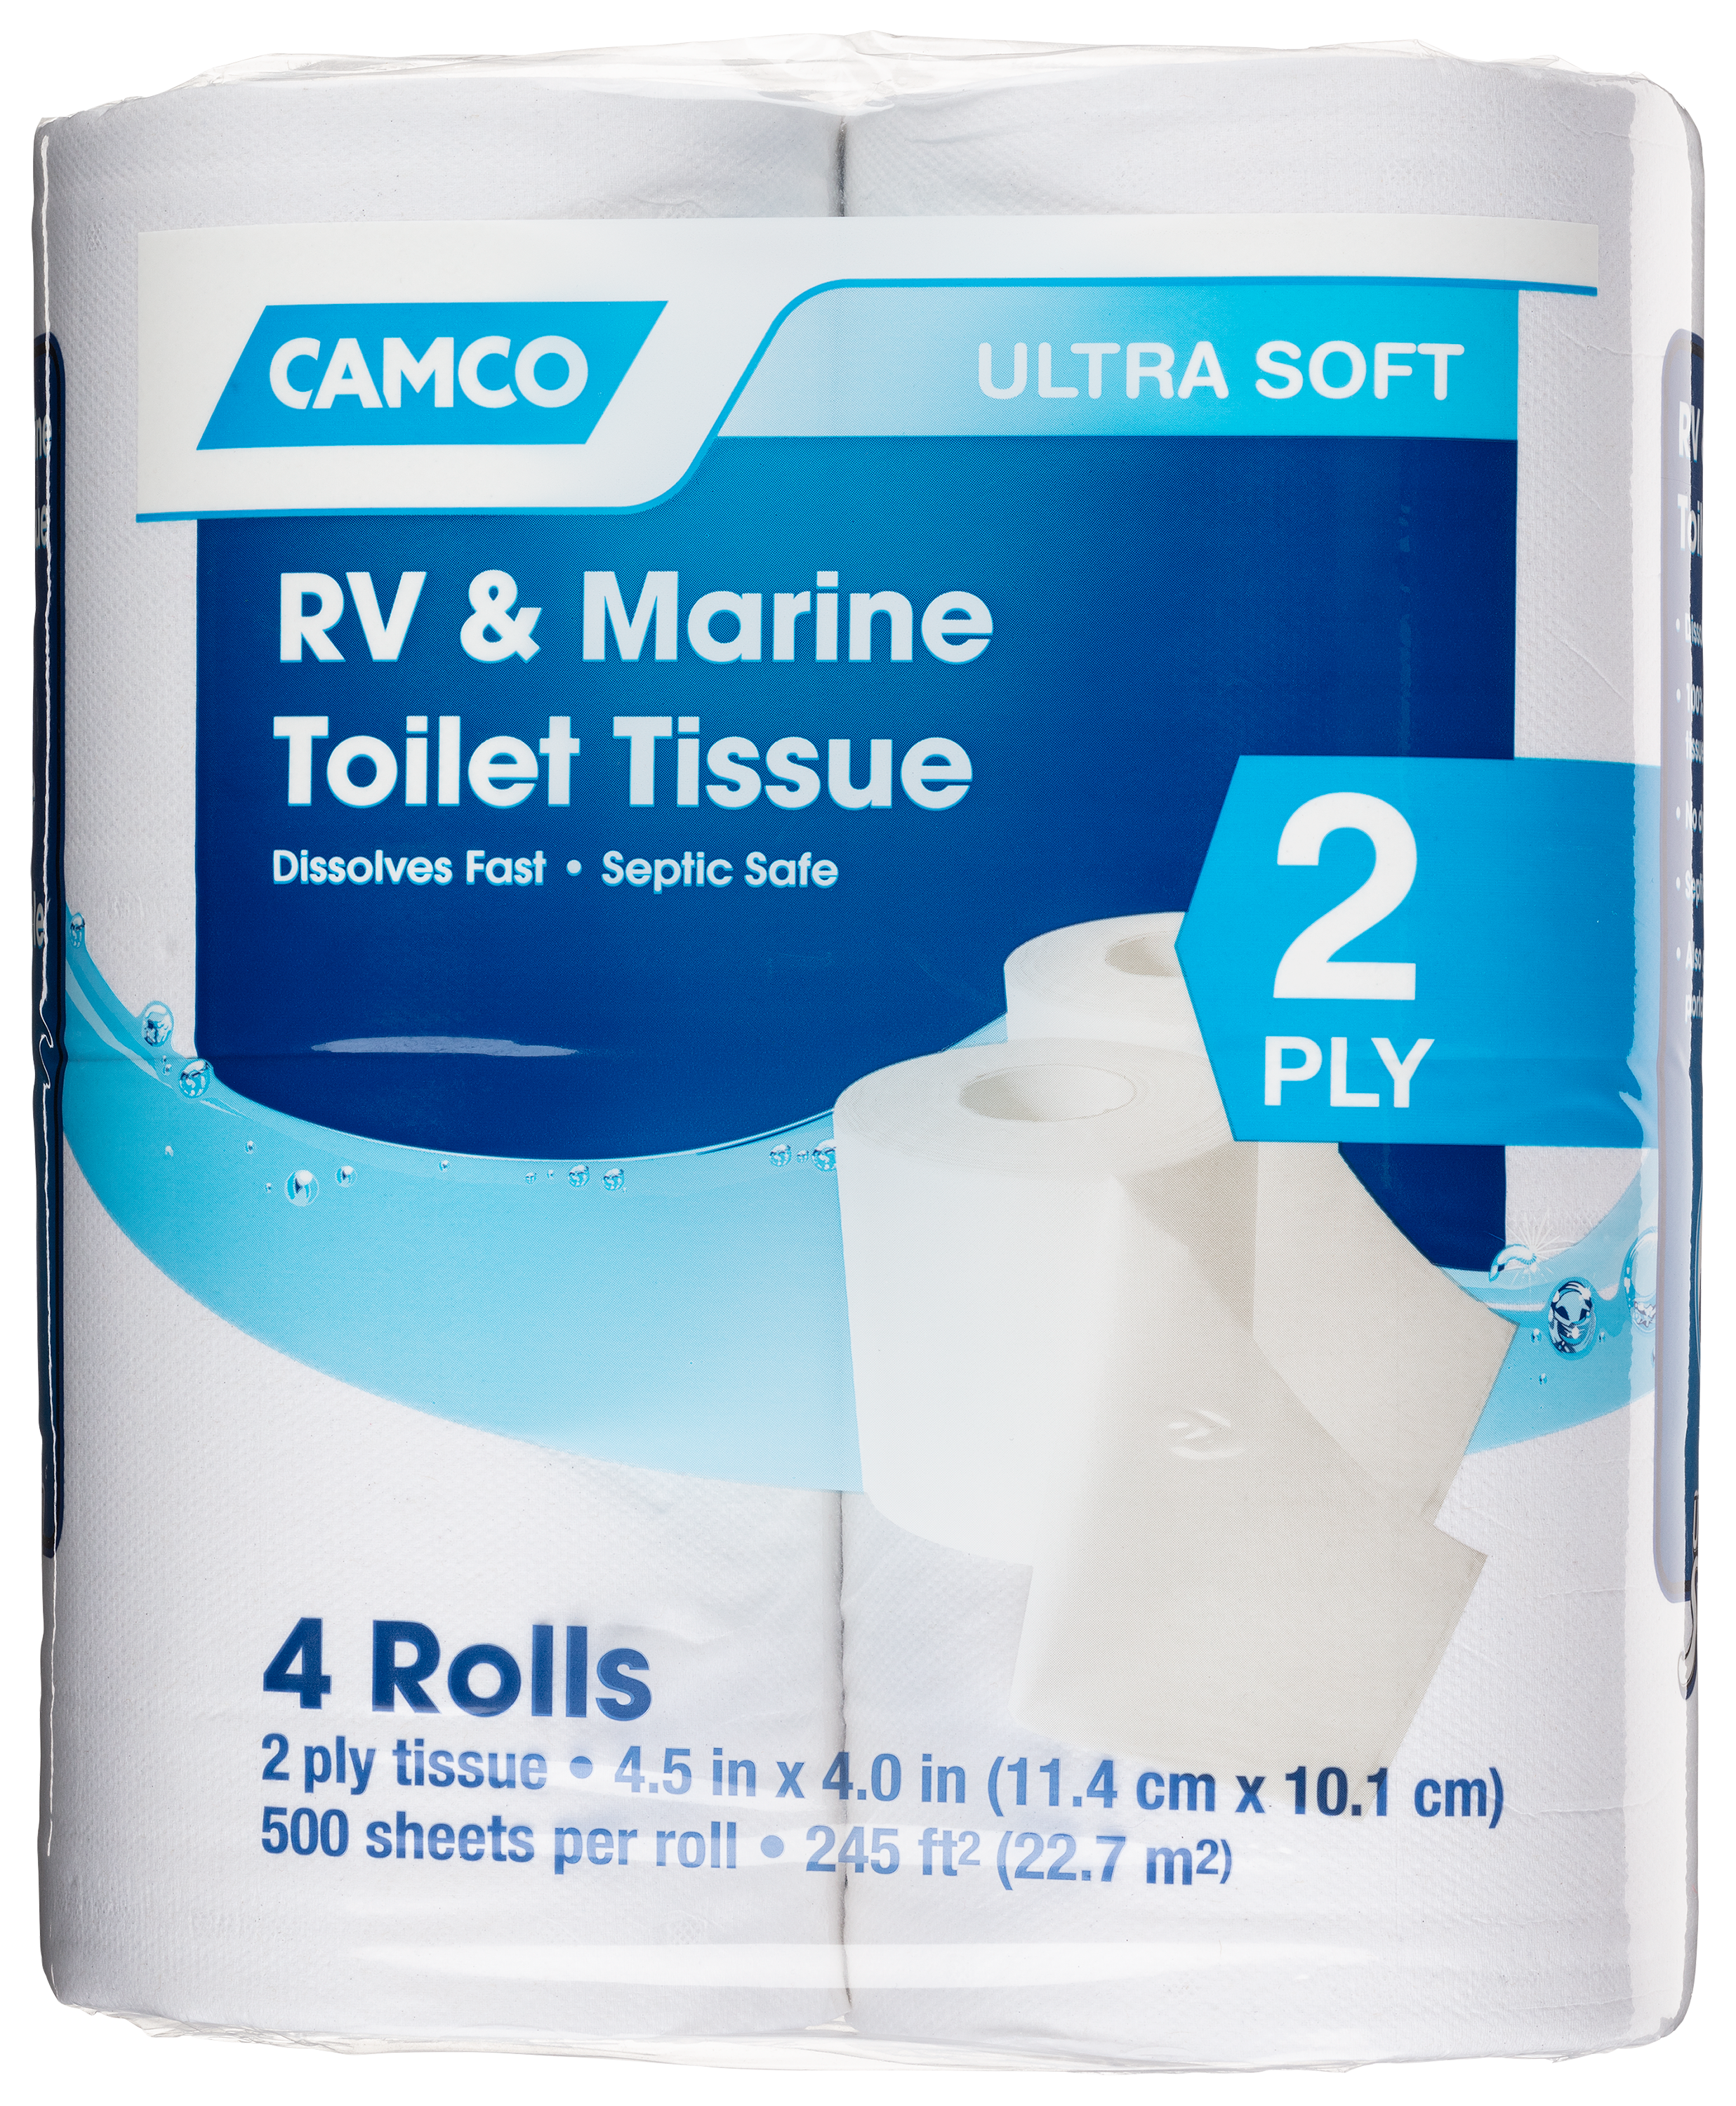 Camco RV/Marine Black Paper Towel Holder